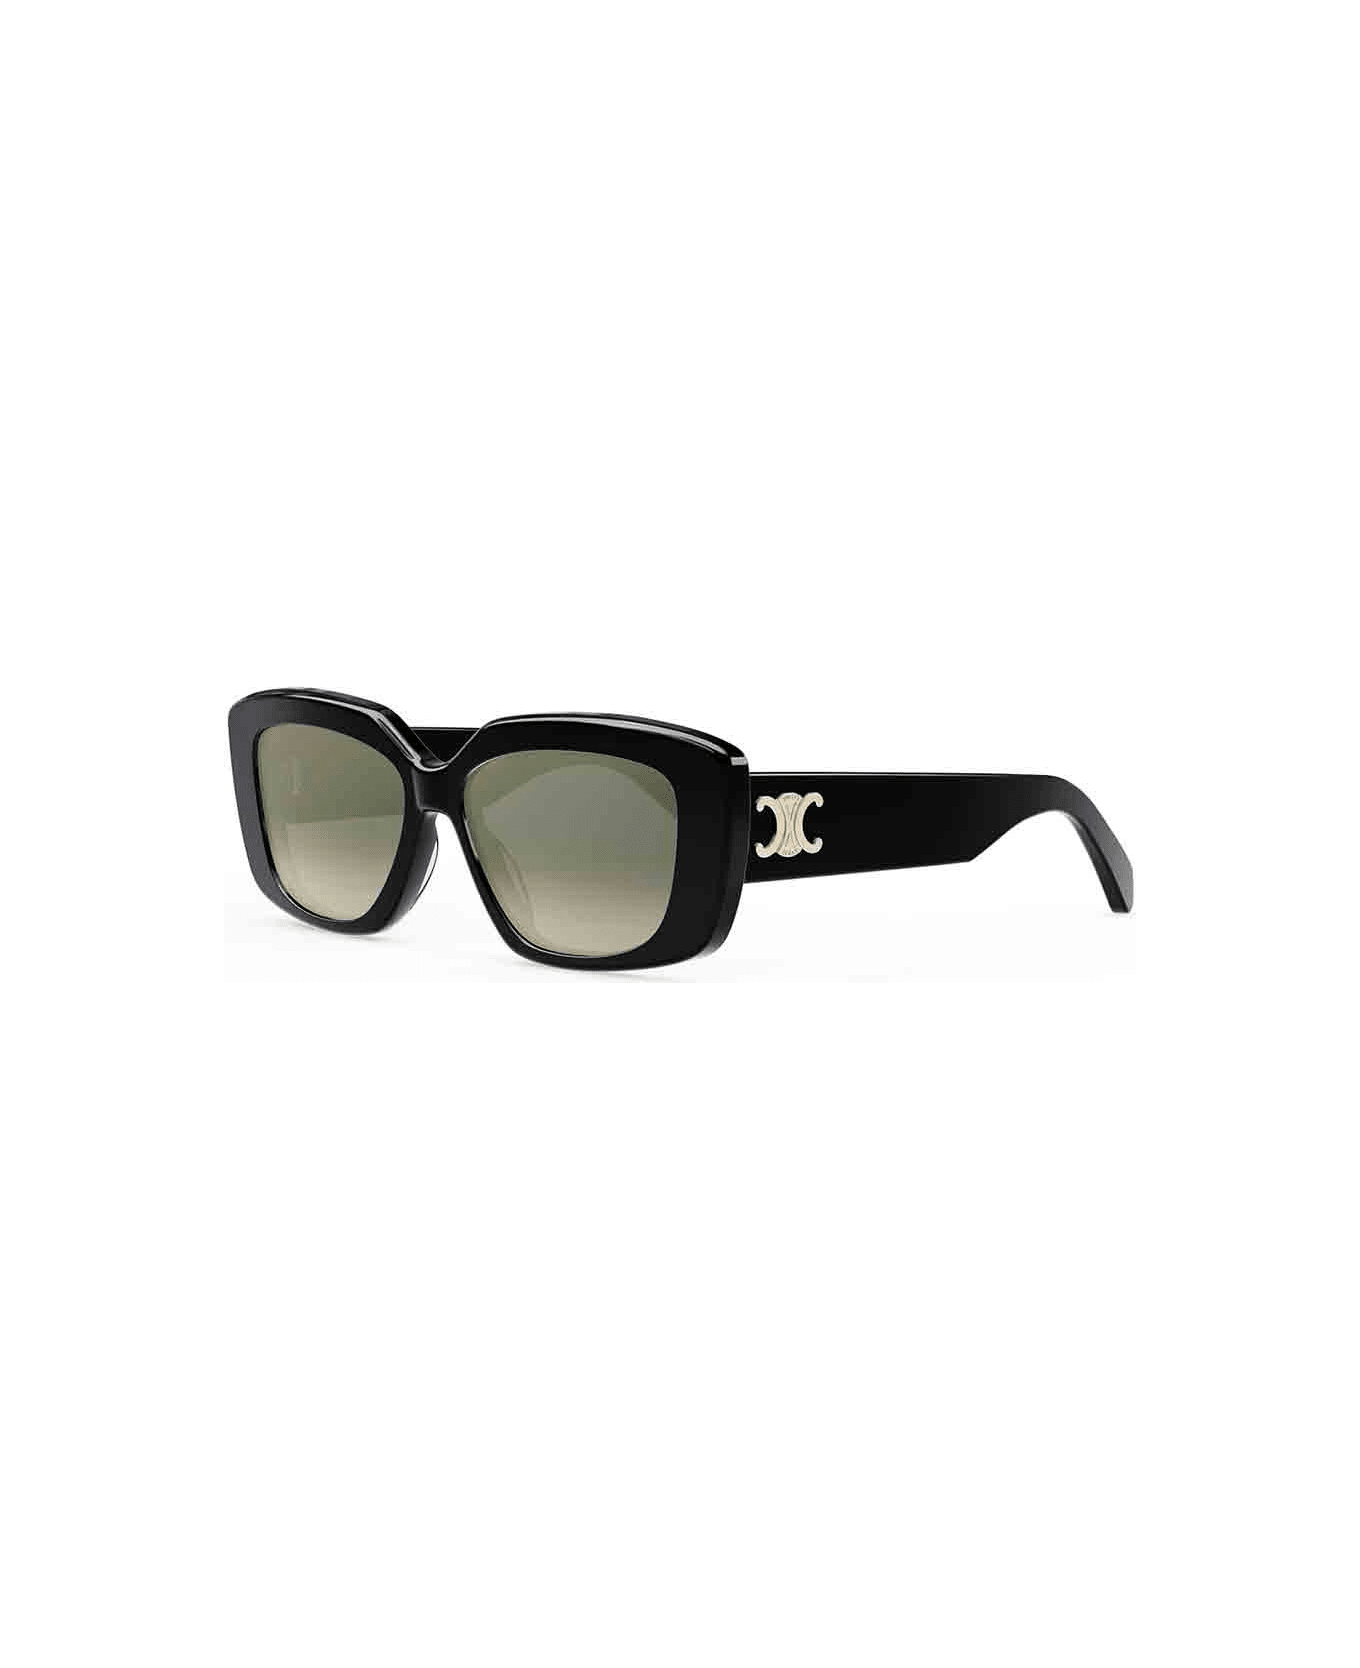 Celine Cat-eye Squared Sunglasses - Nero/Verde